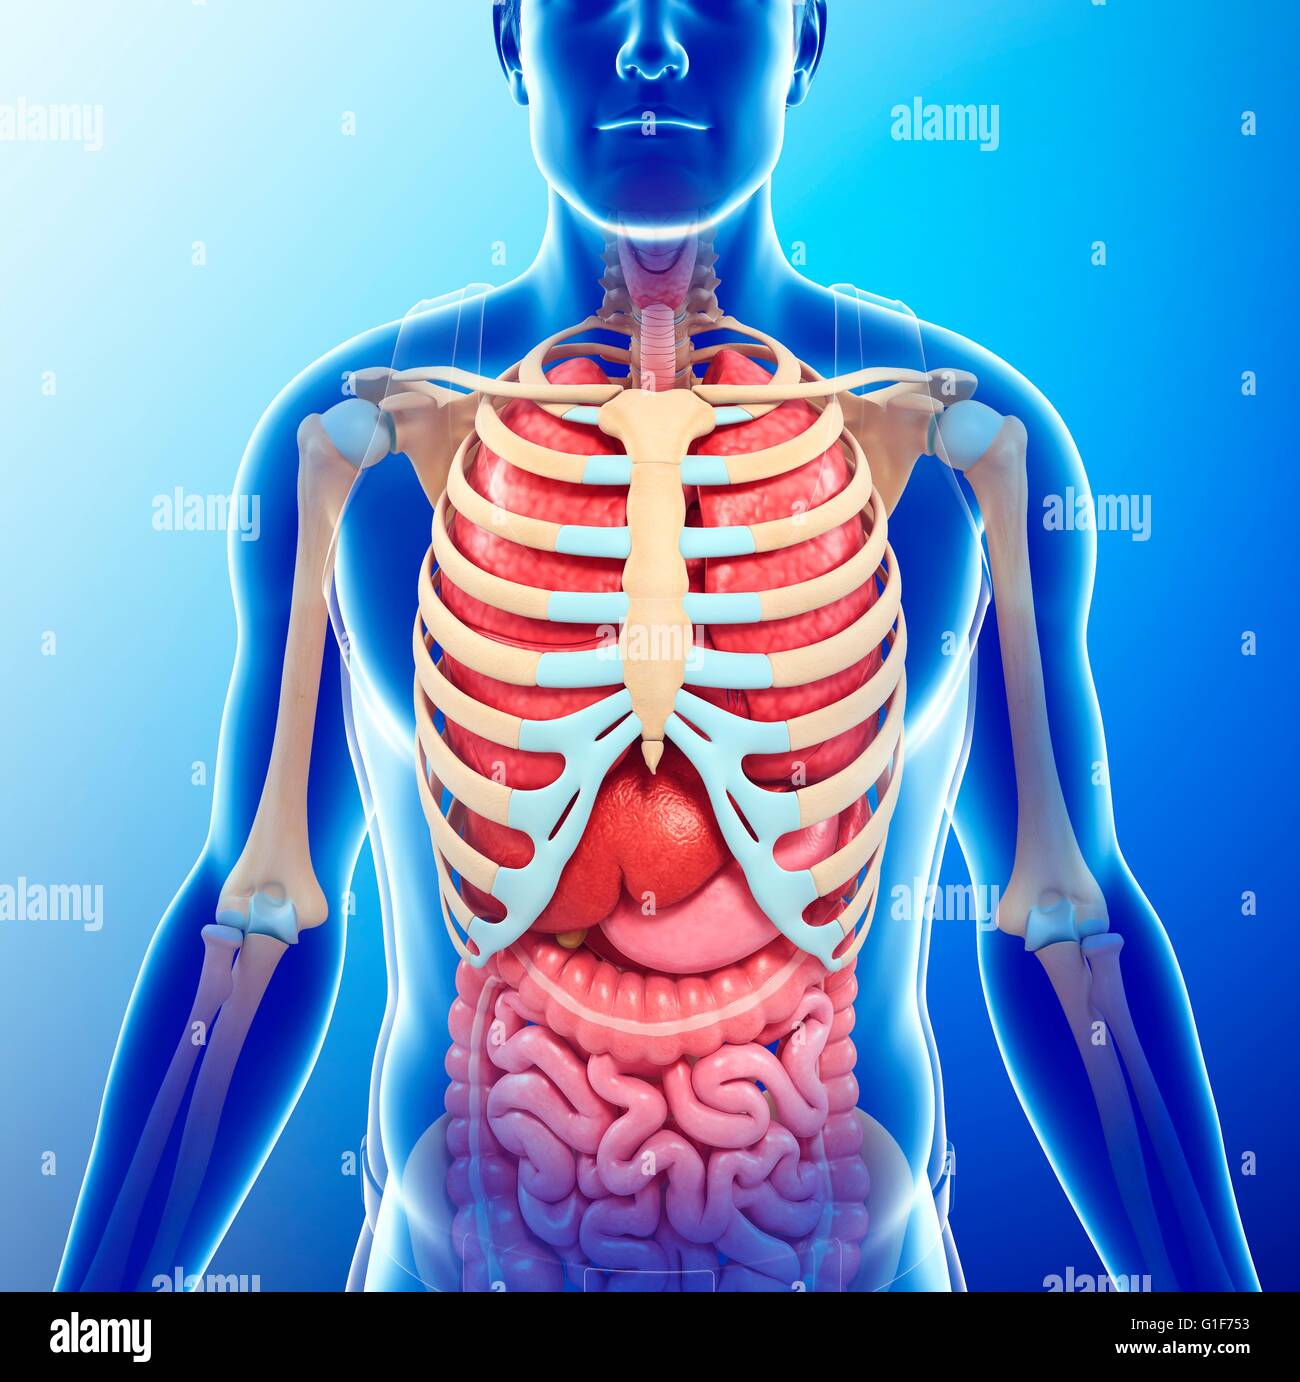 Human chest anatomy, illustration Stock Photo - Alamy